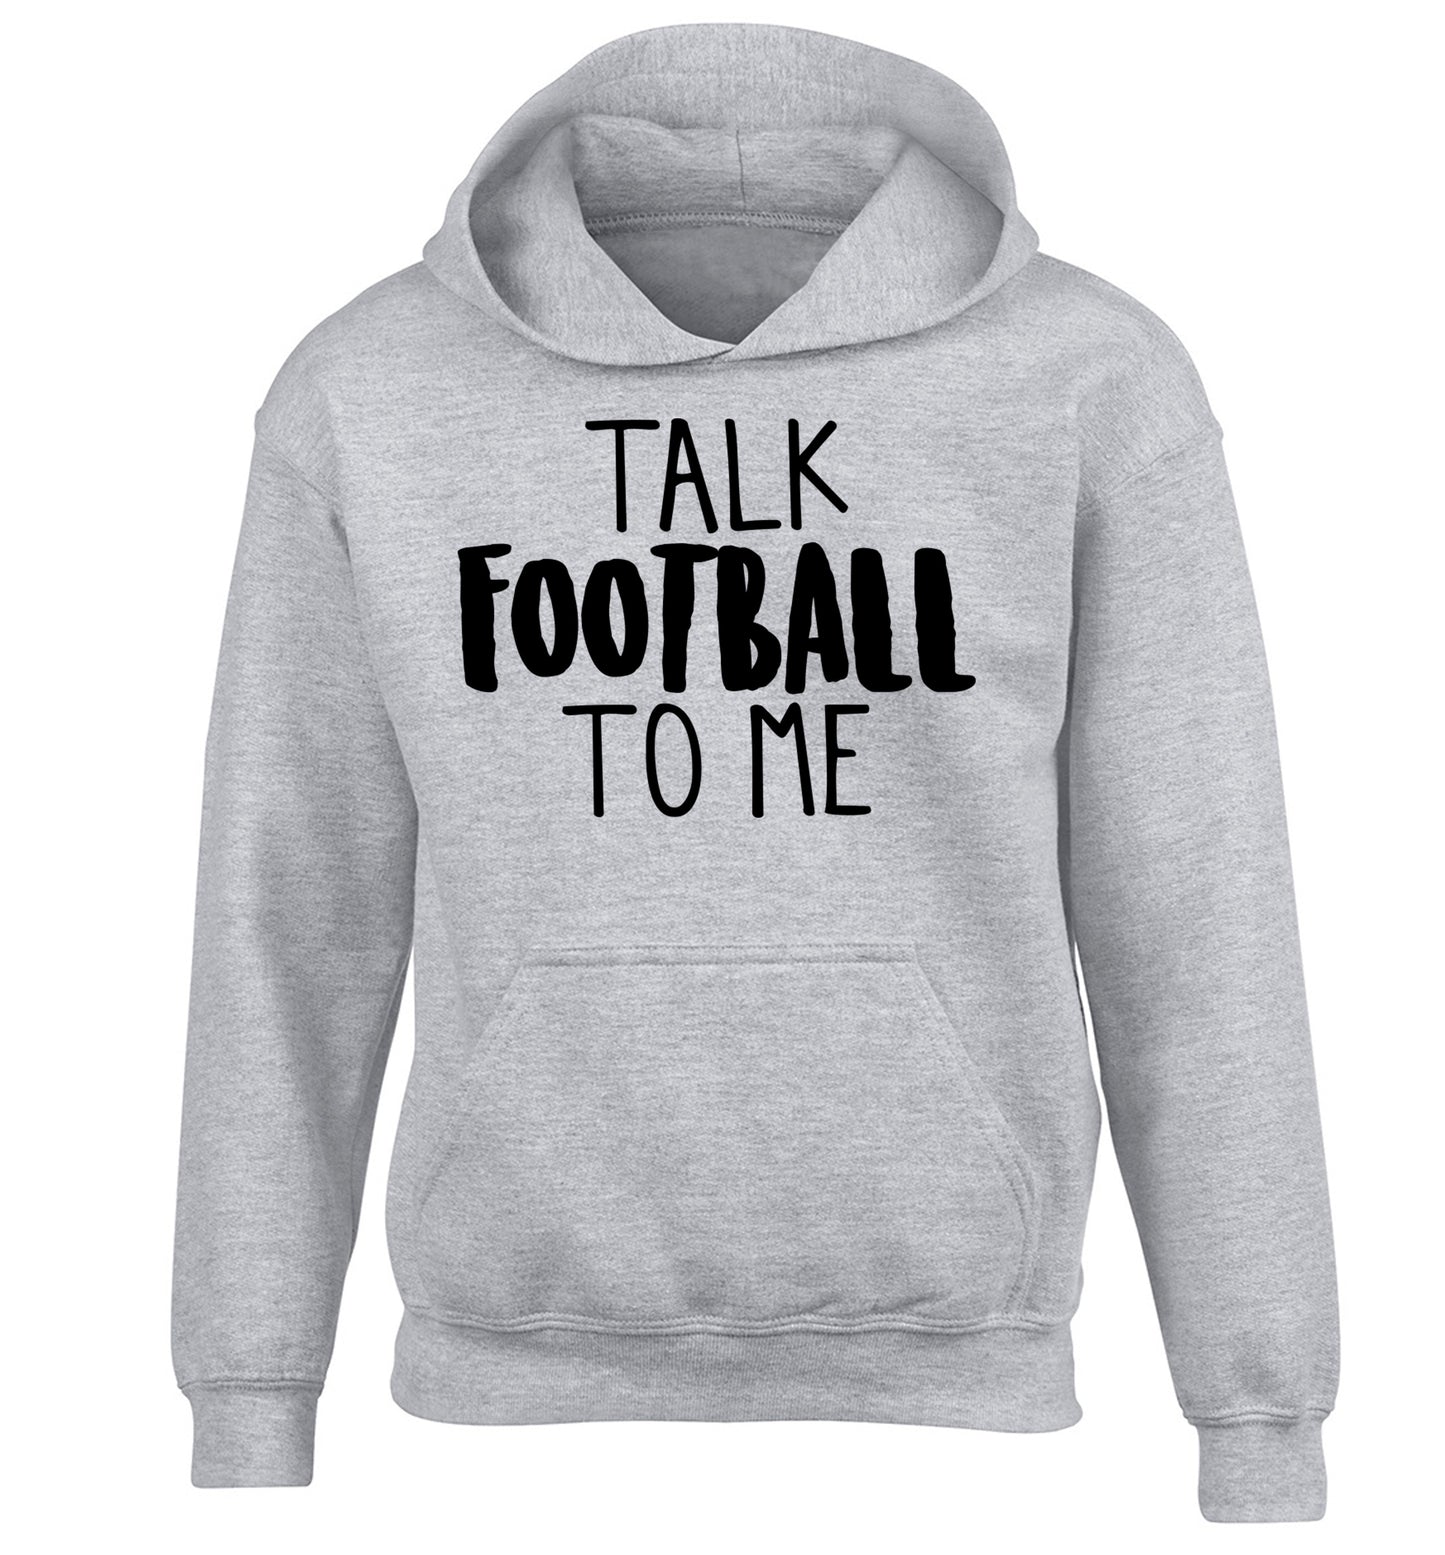 Talk football to me children's grey hoodie 12-14 Years